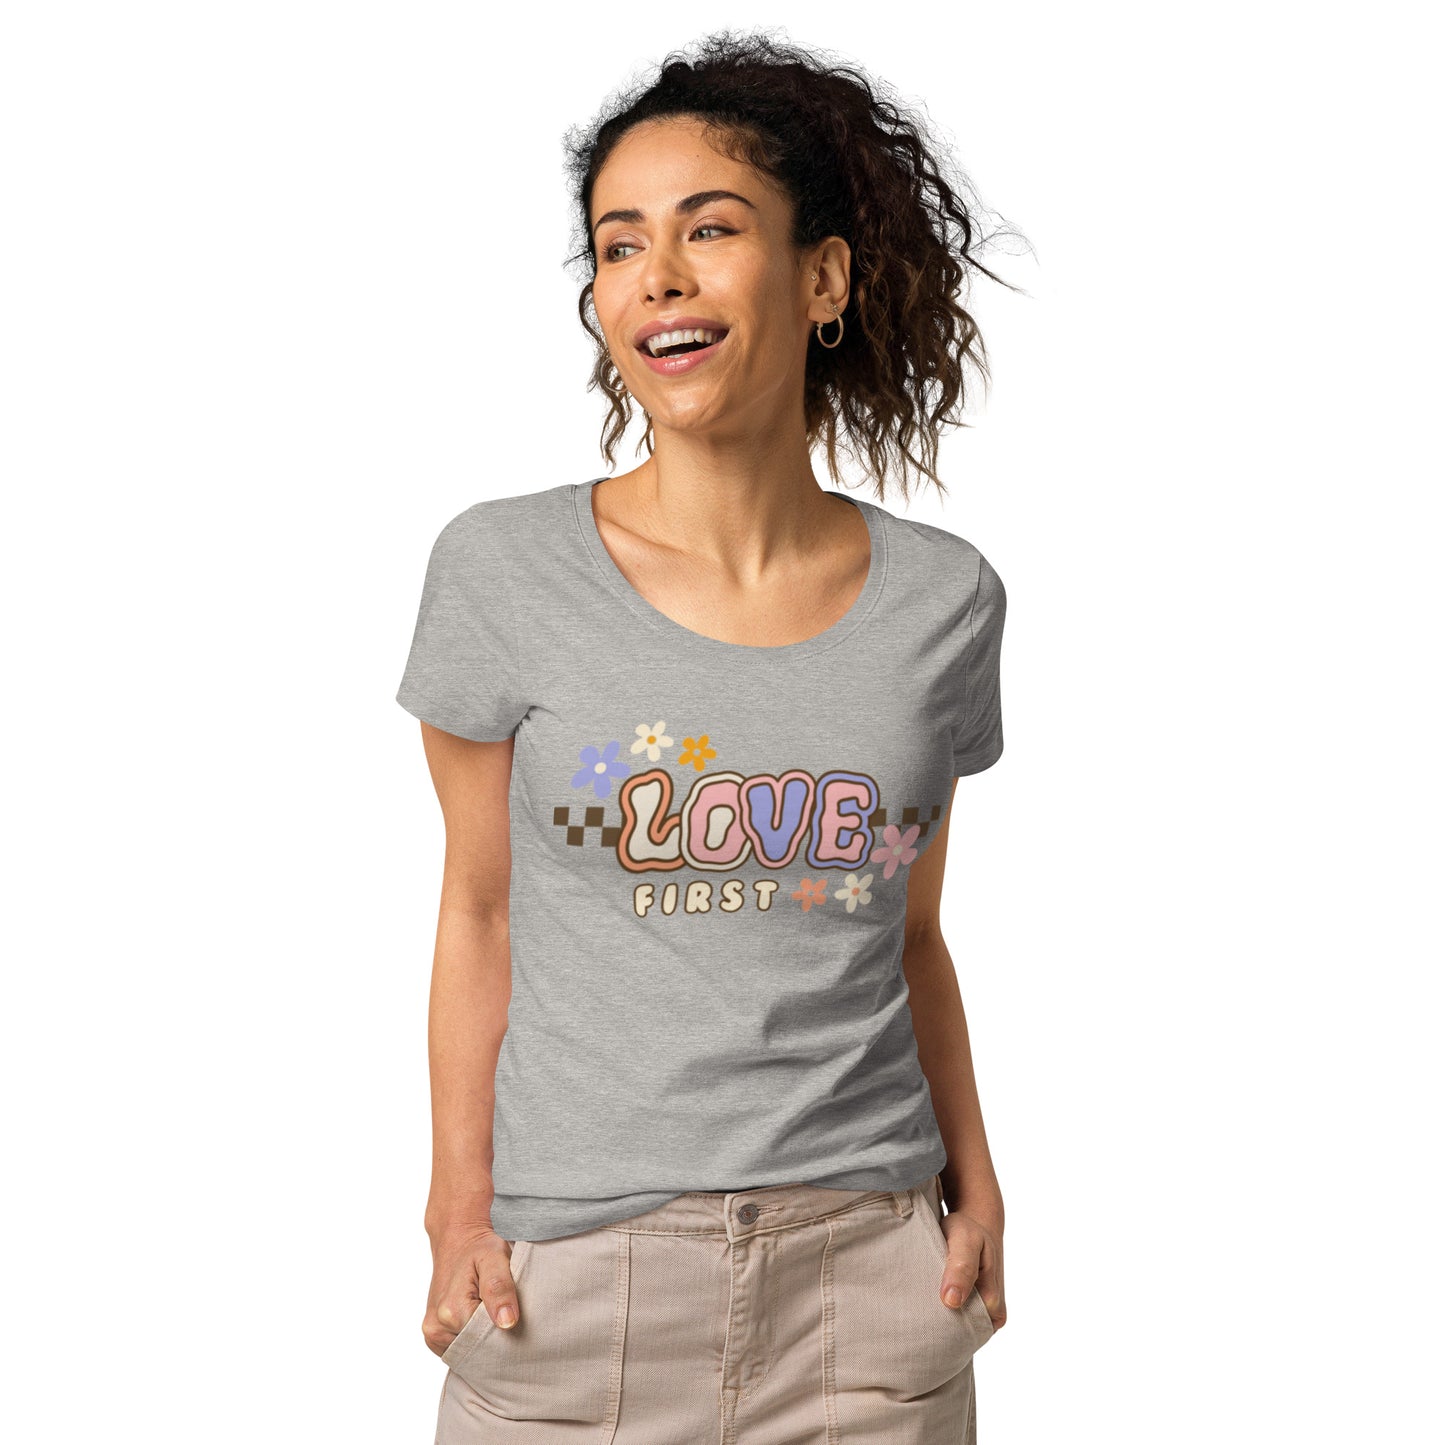 Women’s basic organic t-shirt - LOVE FIRST